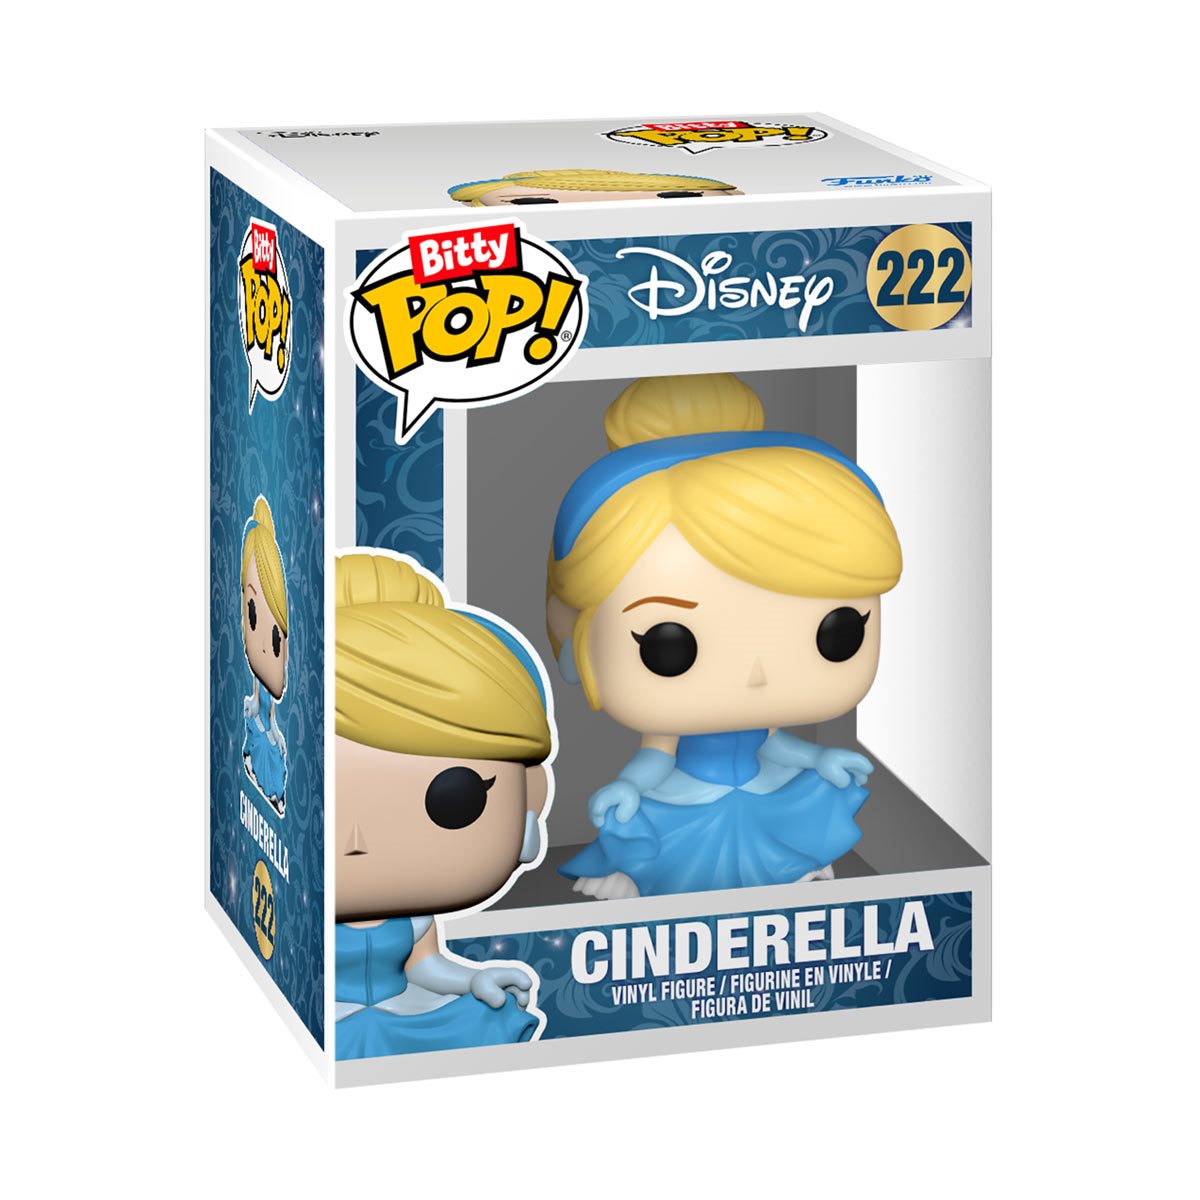 Disney Princesses Cinderella Funko Bitty Pop! Mini-Figure 4-Pack